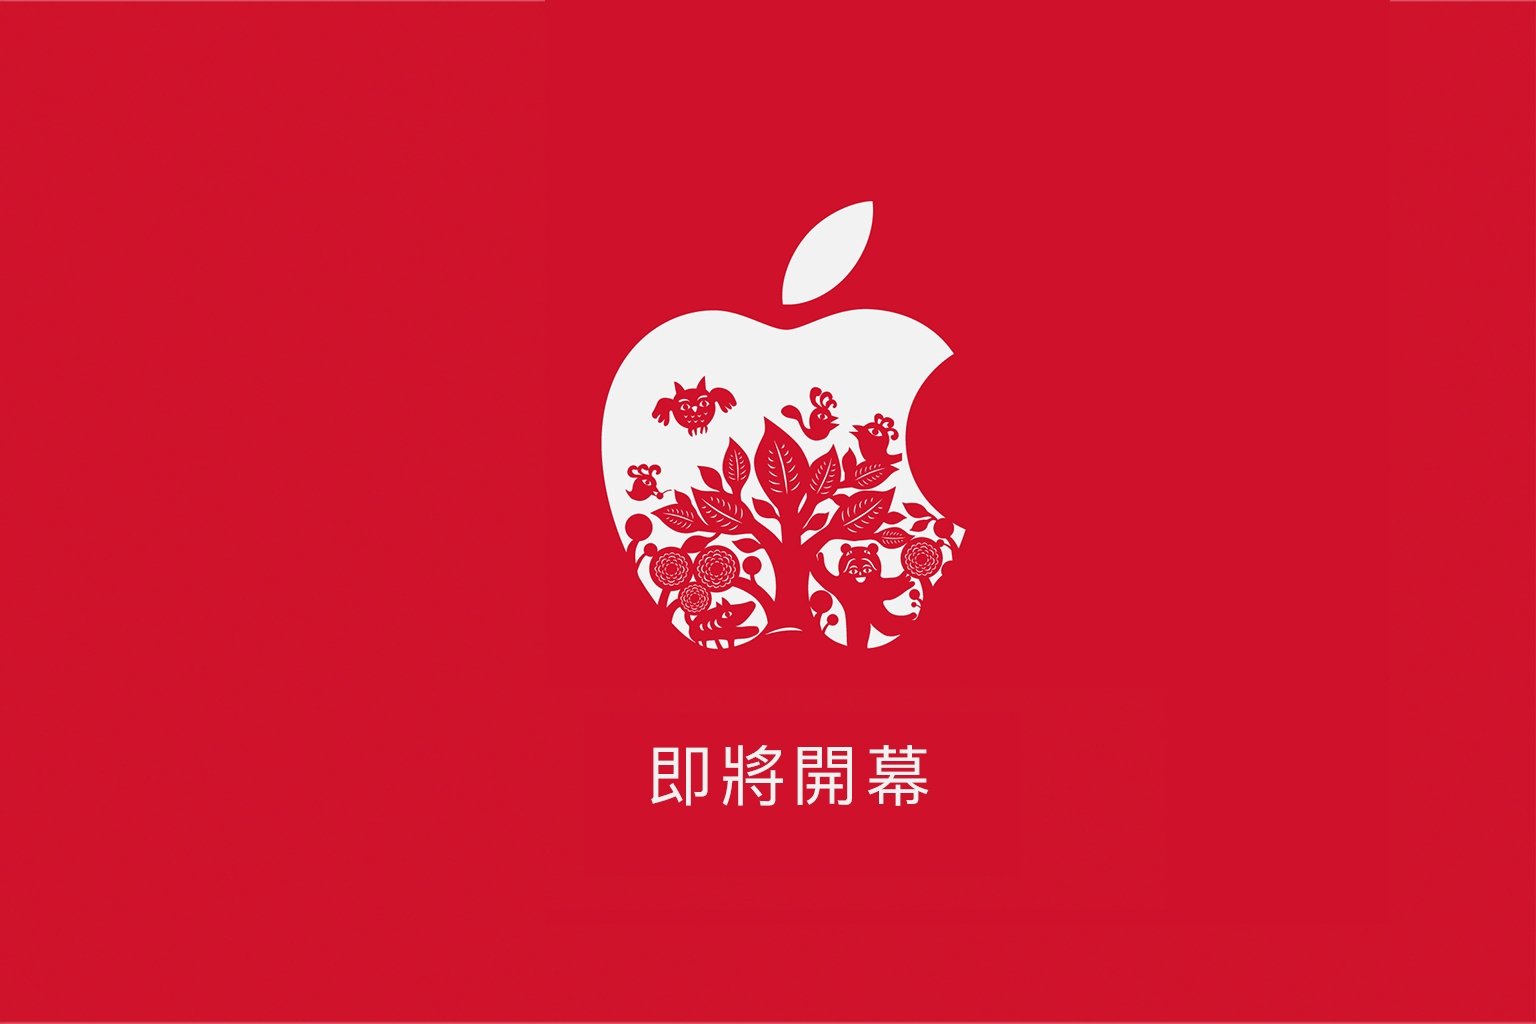 apple store taipei 101 announcement 00